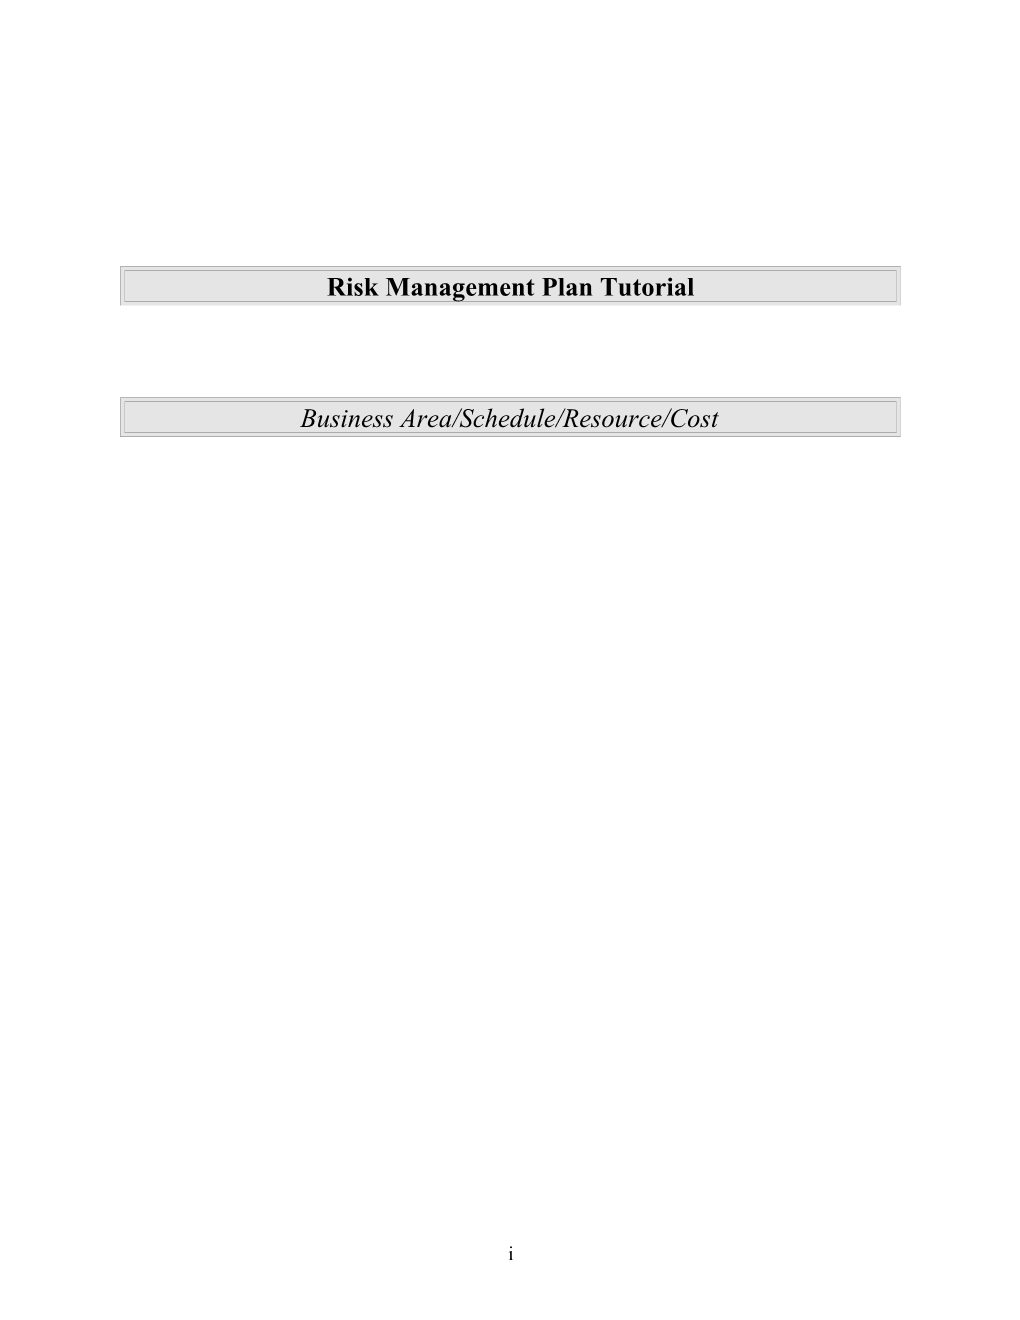 Risk Management Plan Tutorial